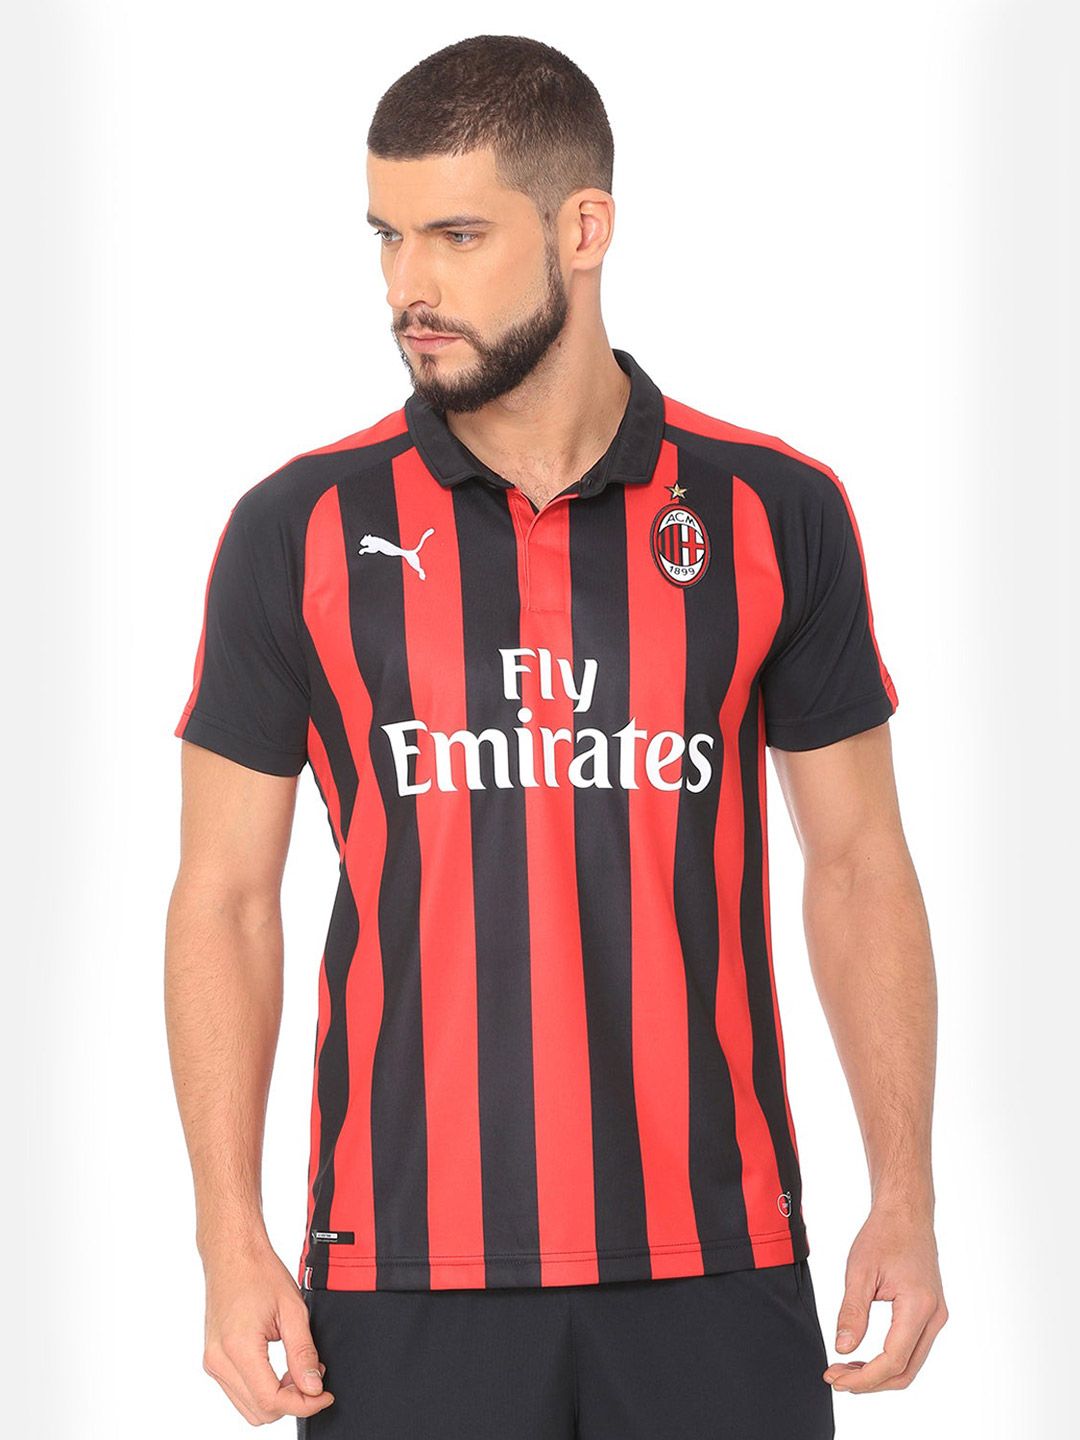 Buy Men Black & Red Printed Ac Milan Home Shirt Replica SS With Sponsor  Logo T-Shirts From Fancode Shop.